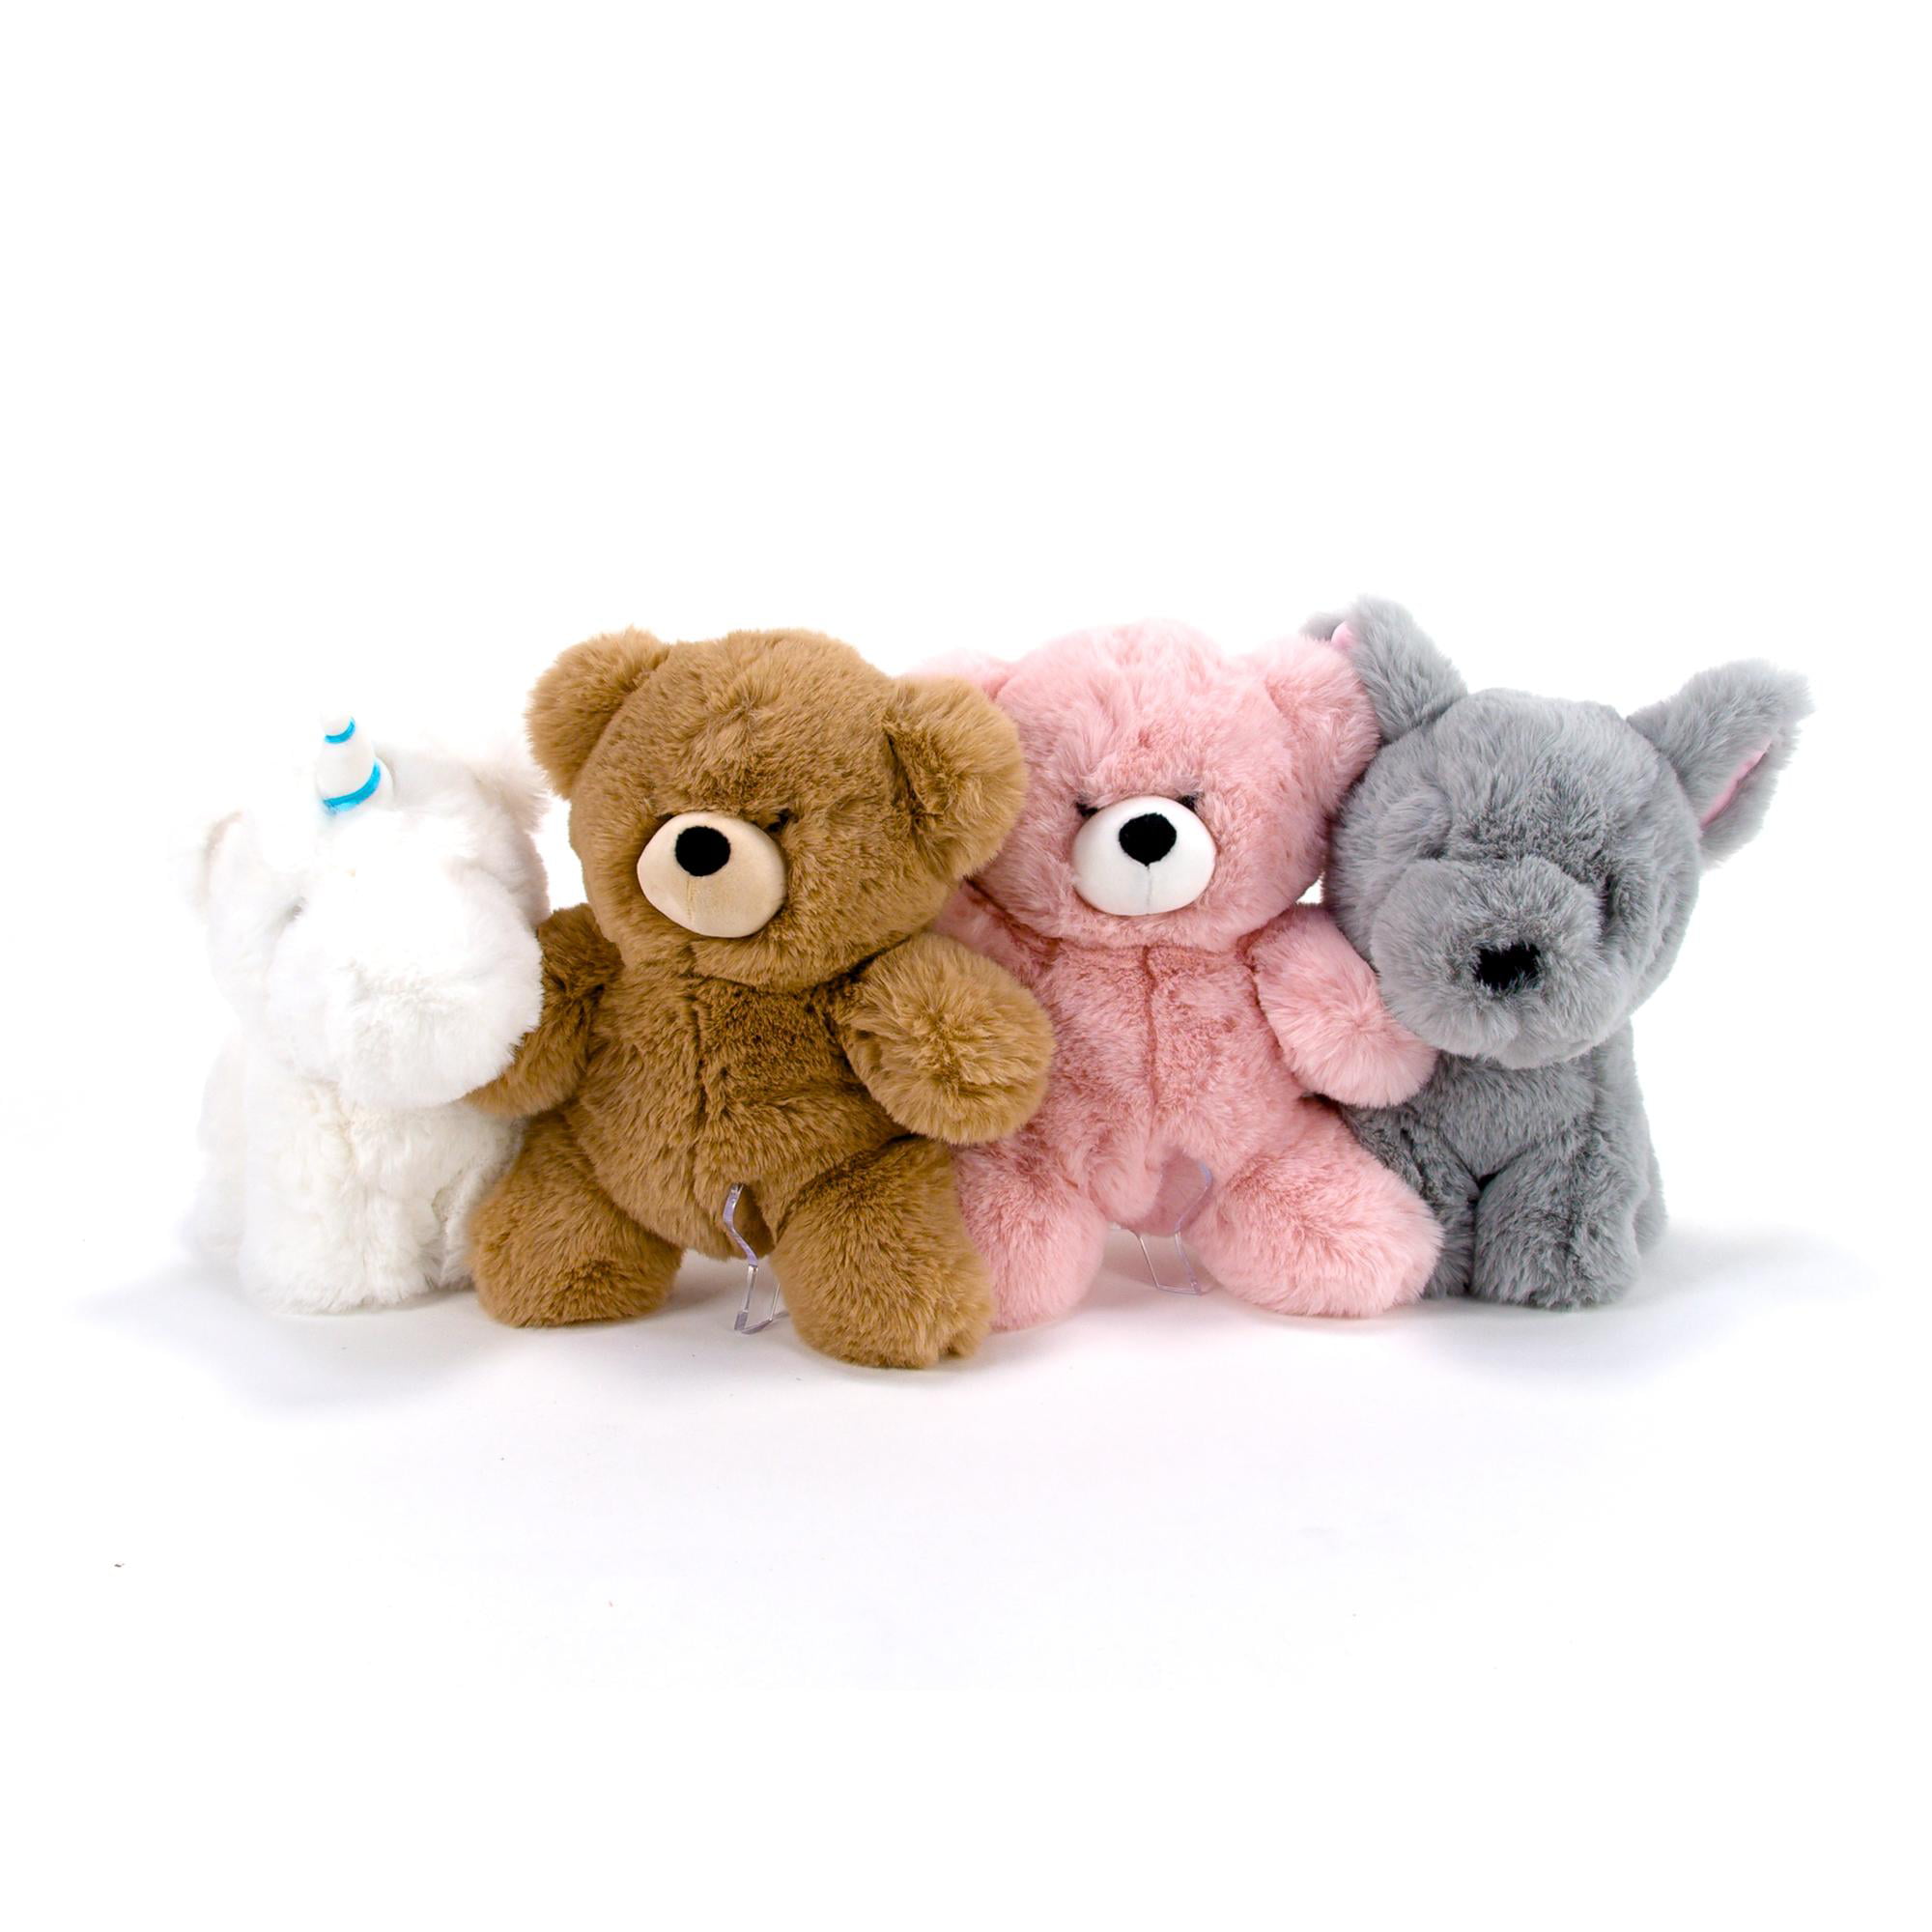 softest stuffed animals